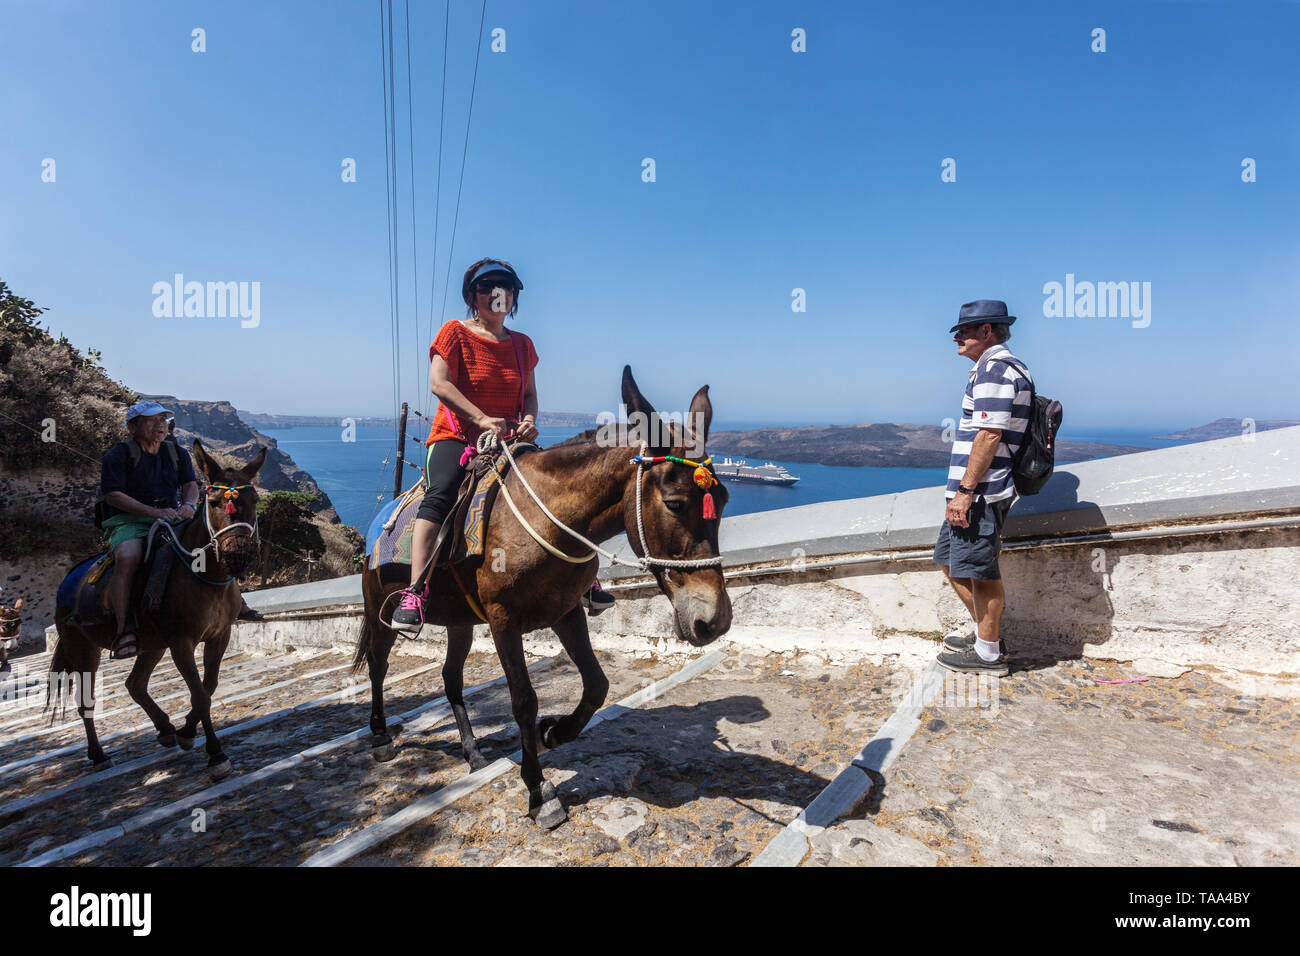 Santorini Greece Tourism, People, Tourists on donkey path, Europe Stock Photo